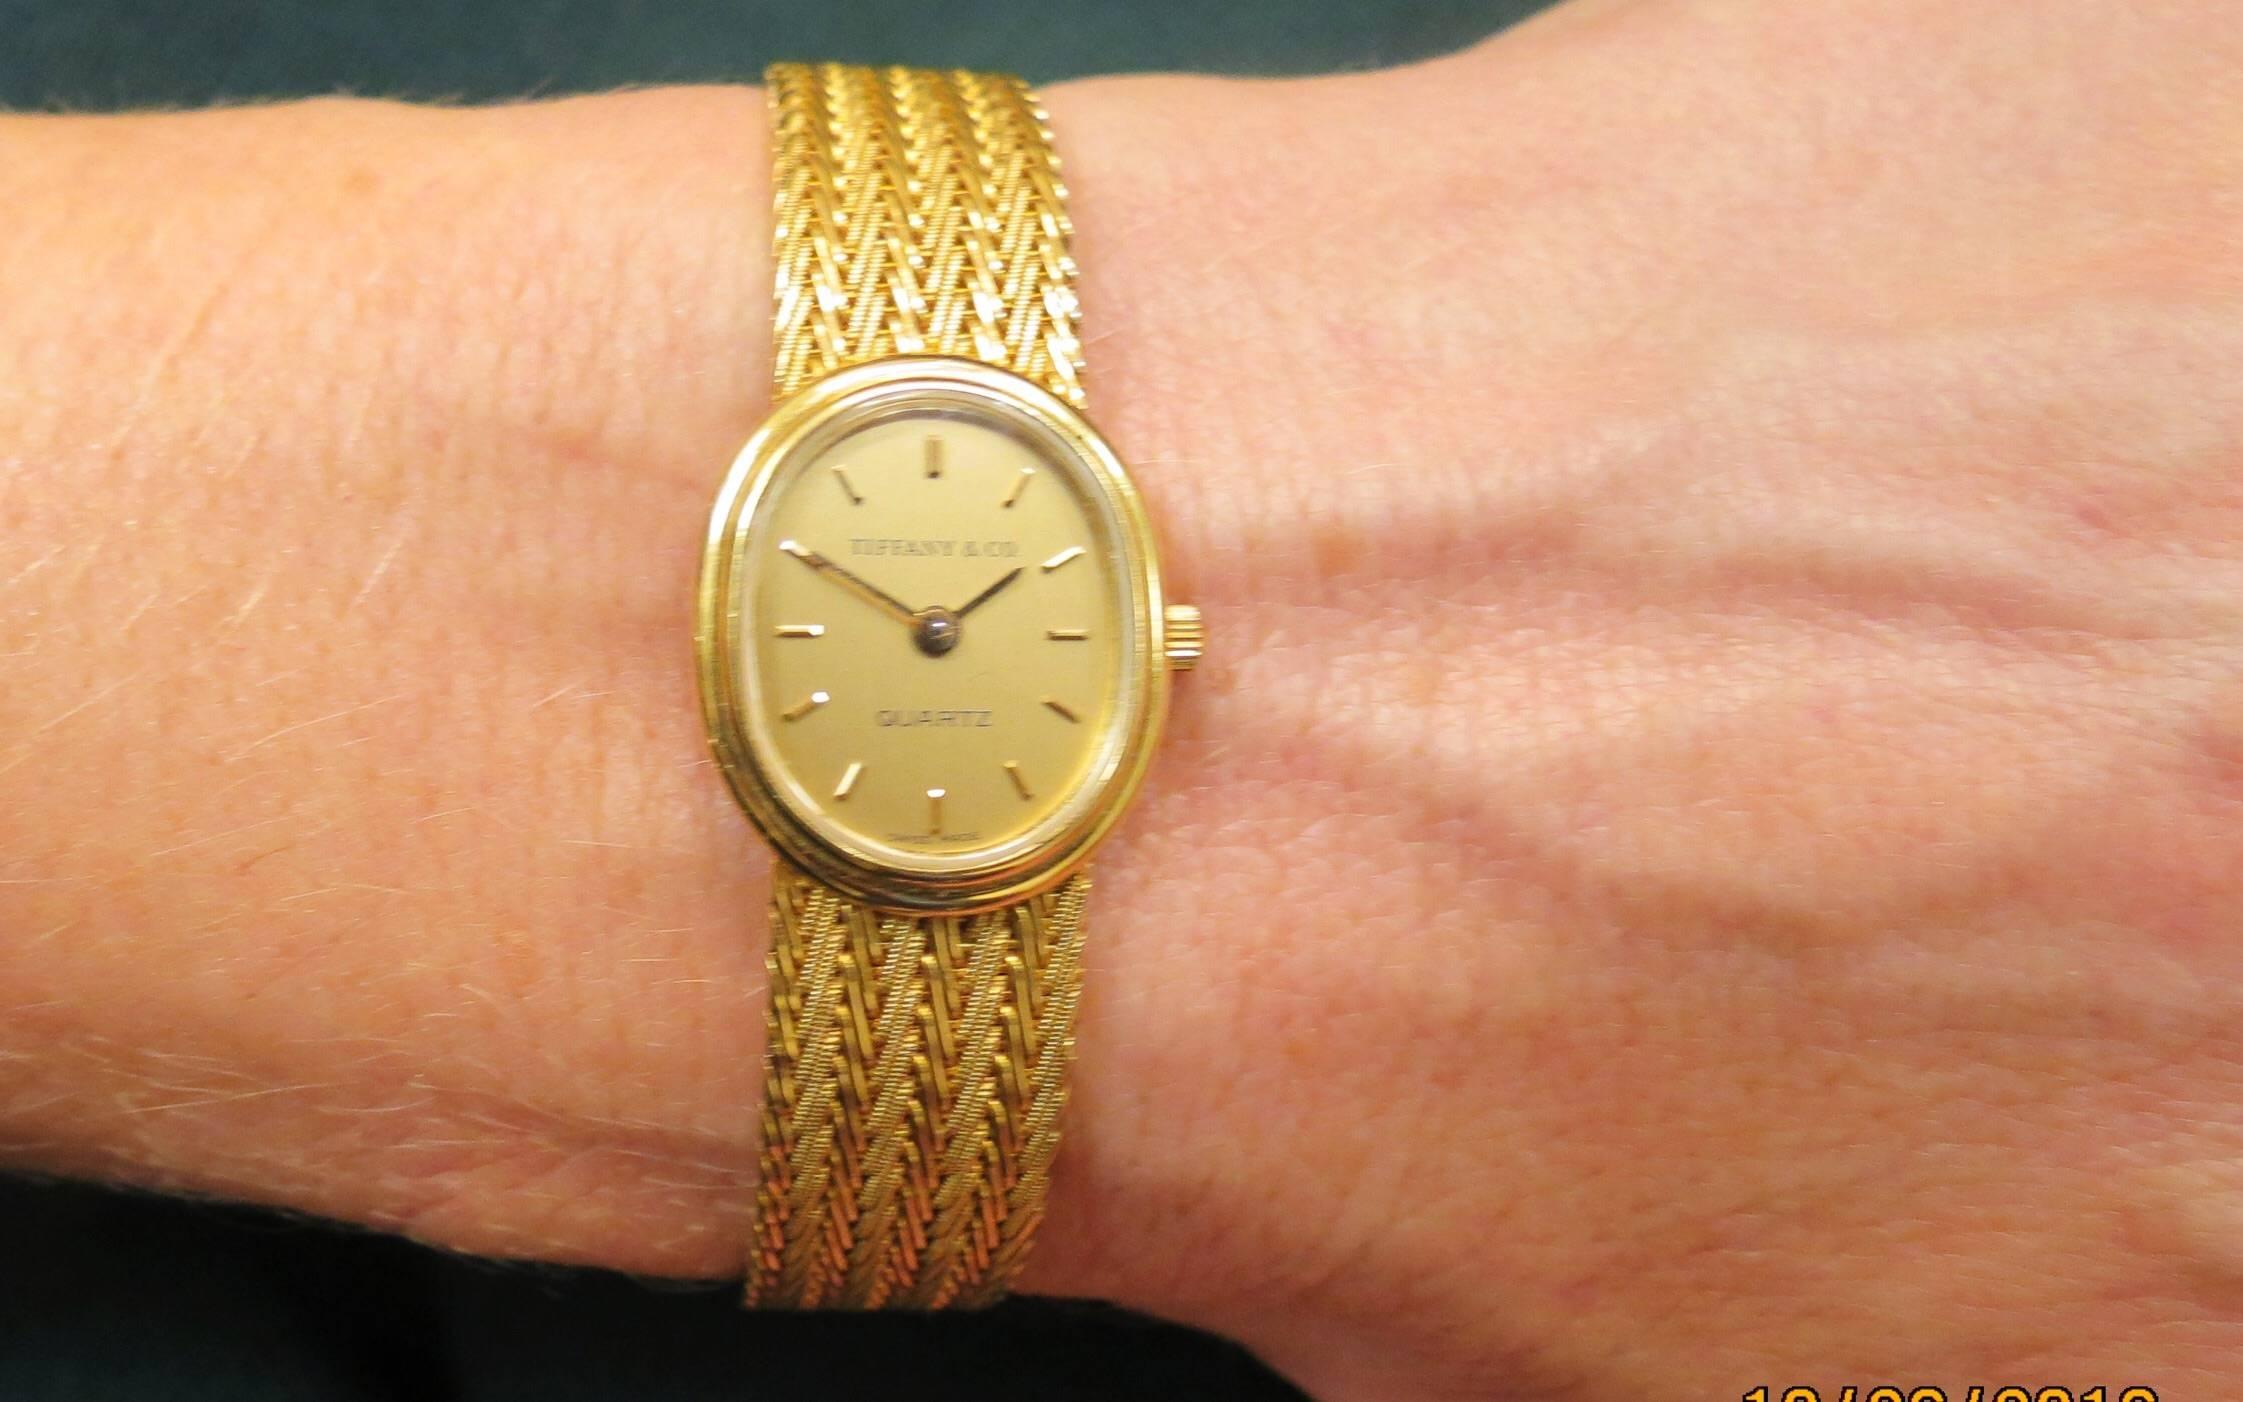 Tiffany & Co 18K yellow gold ladies oval bracelet watch, quartz movement, gold dial, stick markers, Tiffany & Co. on dial, pre-owned.

Bracelet length 6.38
Bracelet width .43
Case size 20mm x 16mm